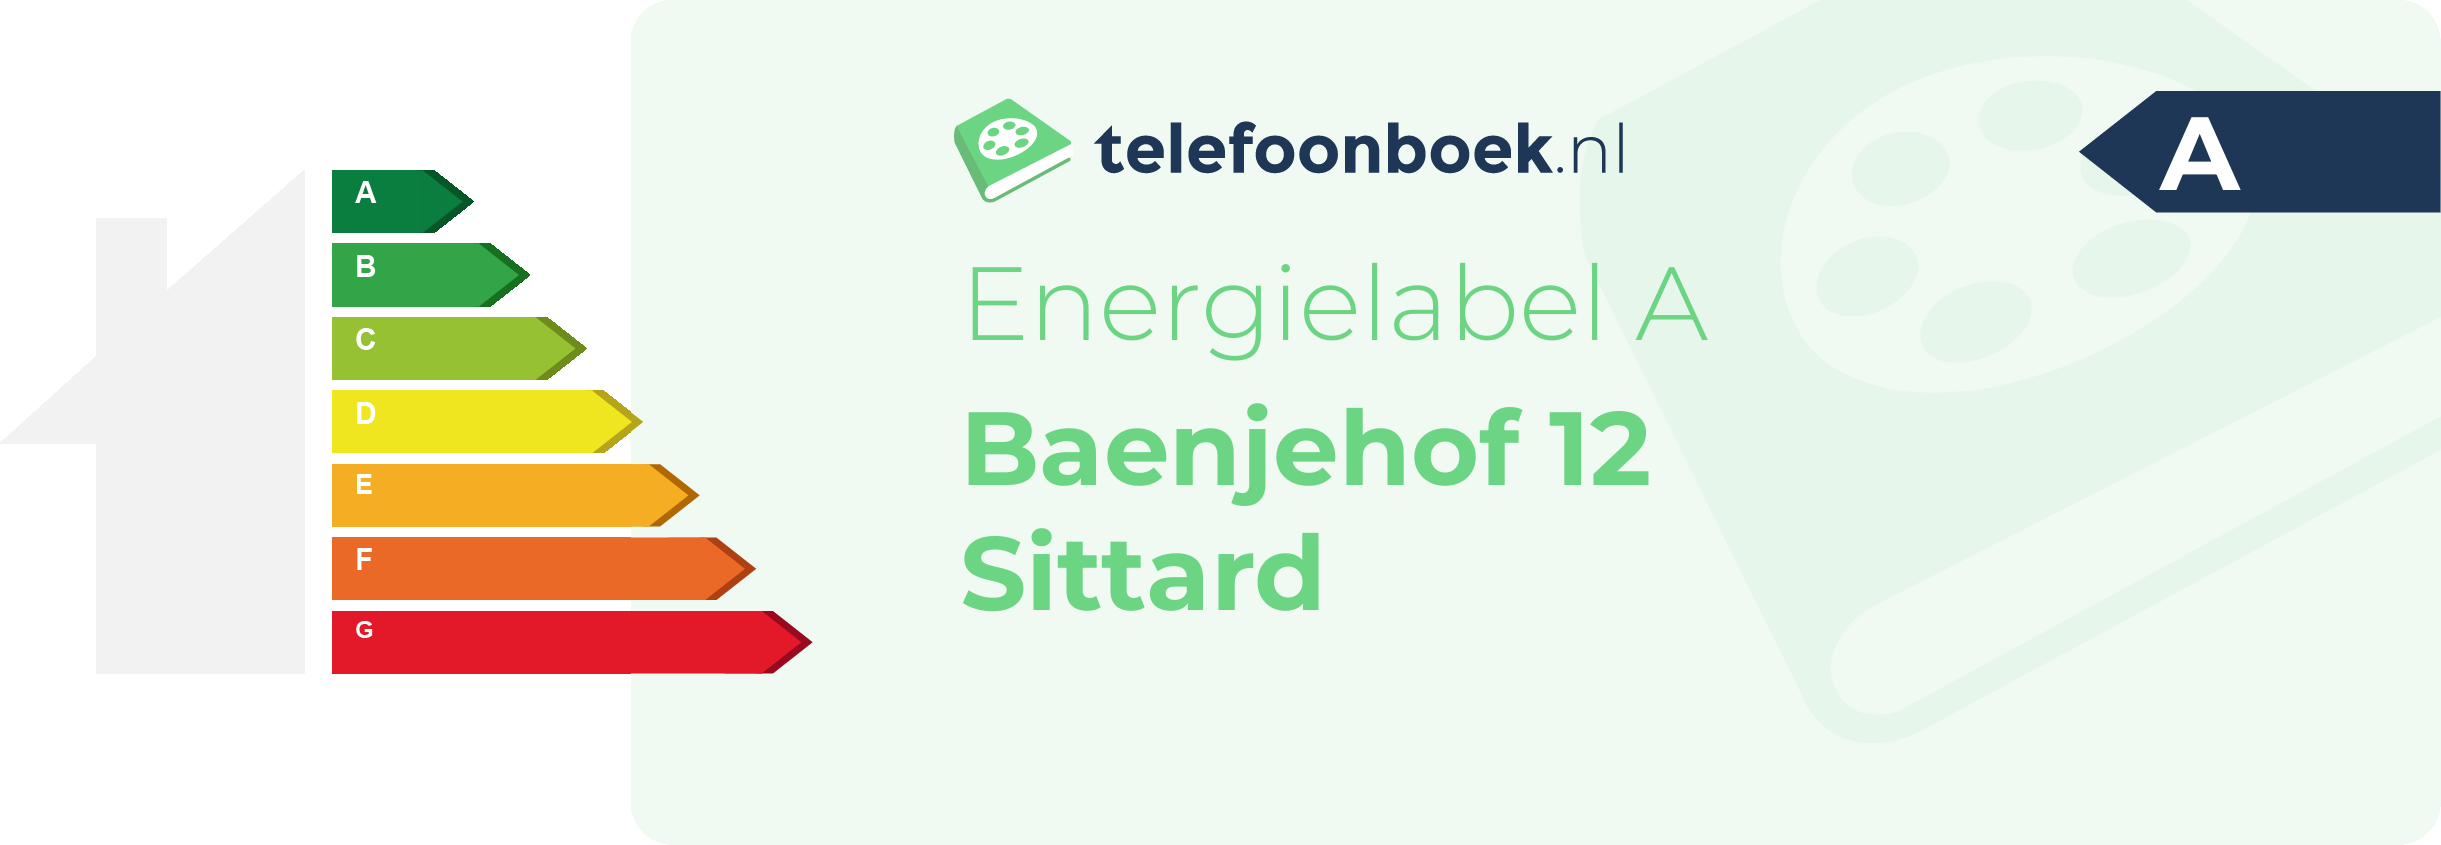 Energielabel Baenjehof 12 Sittard